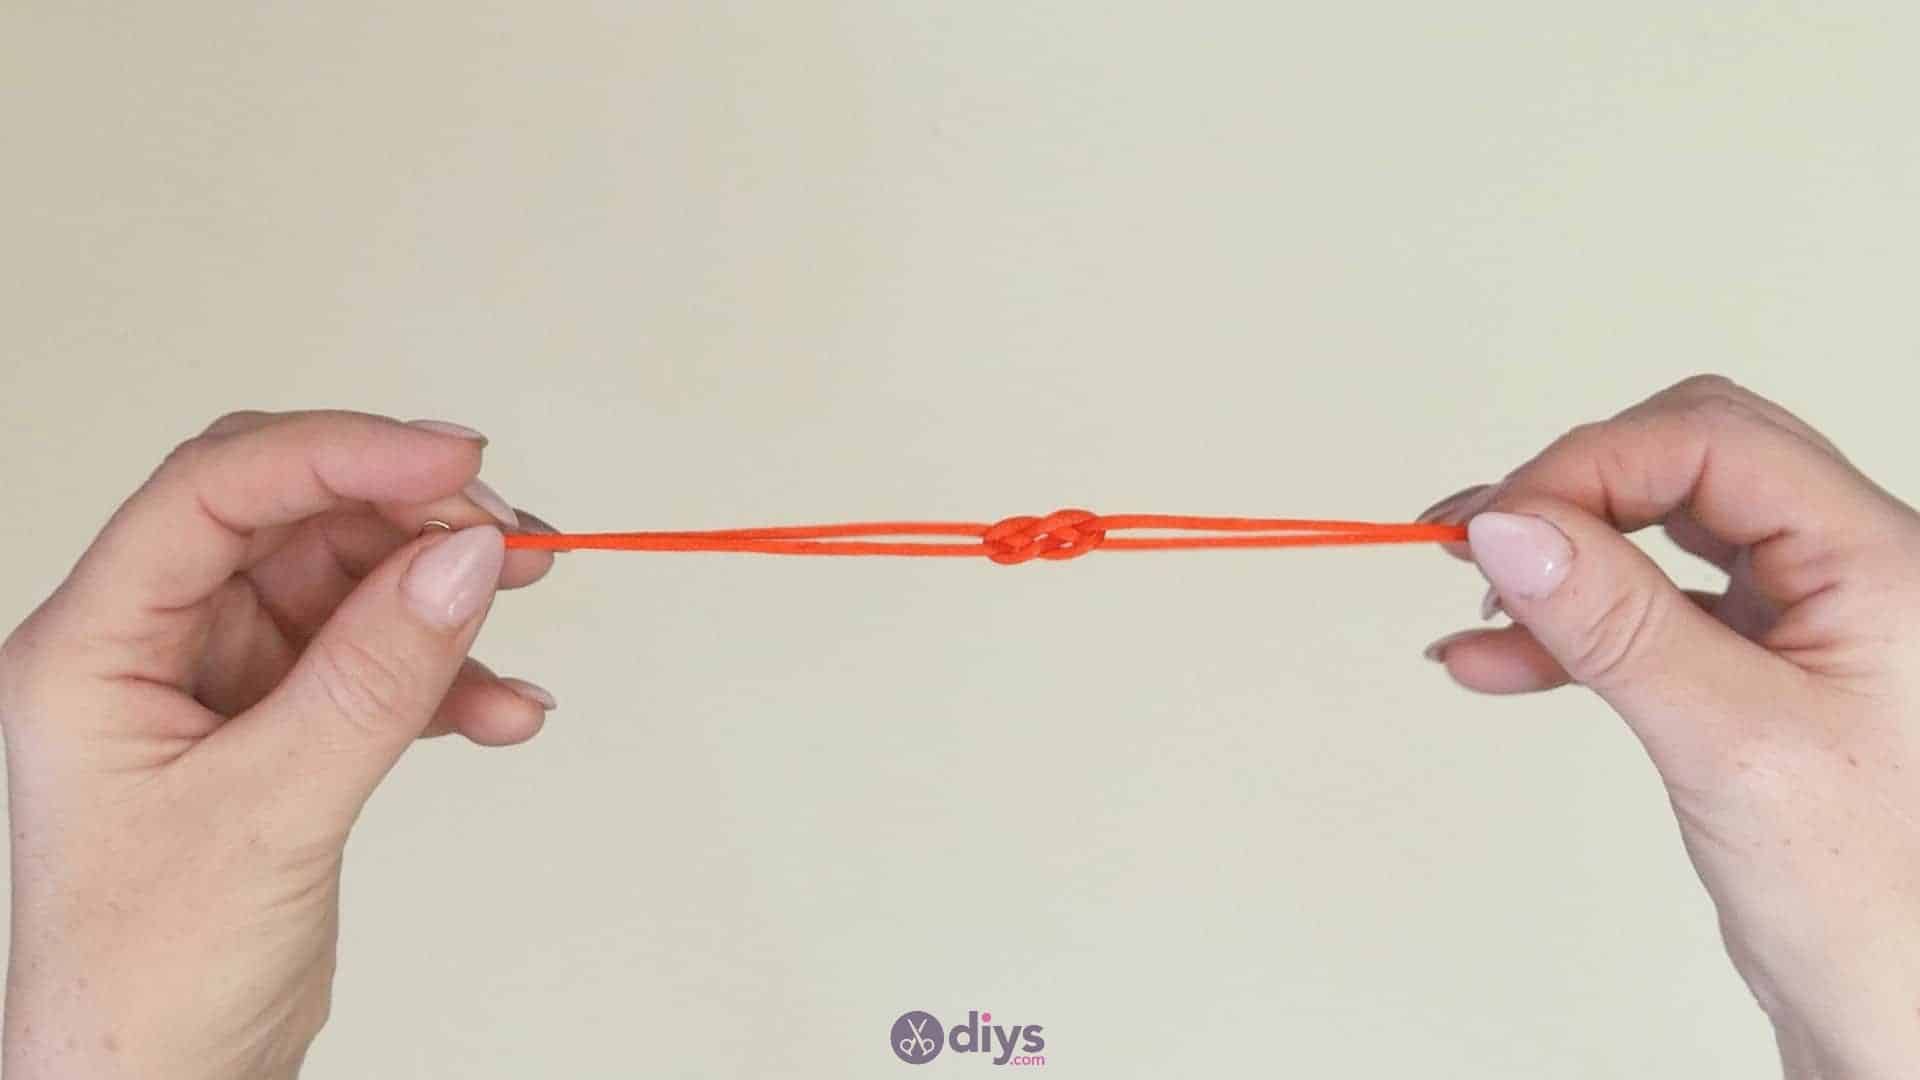 Diy knotted bracelet step 4b